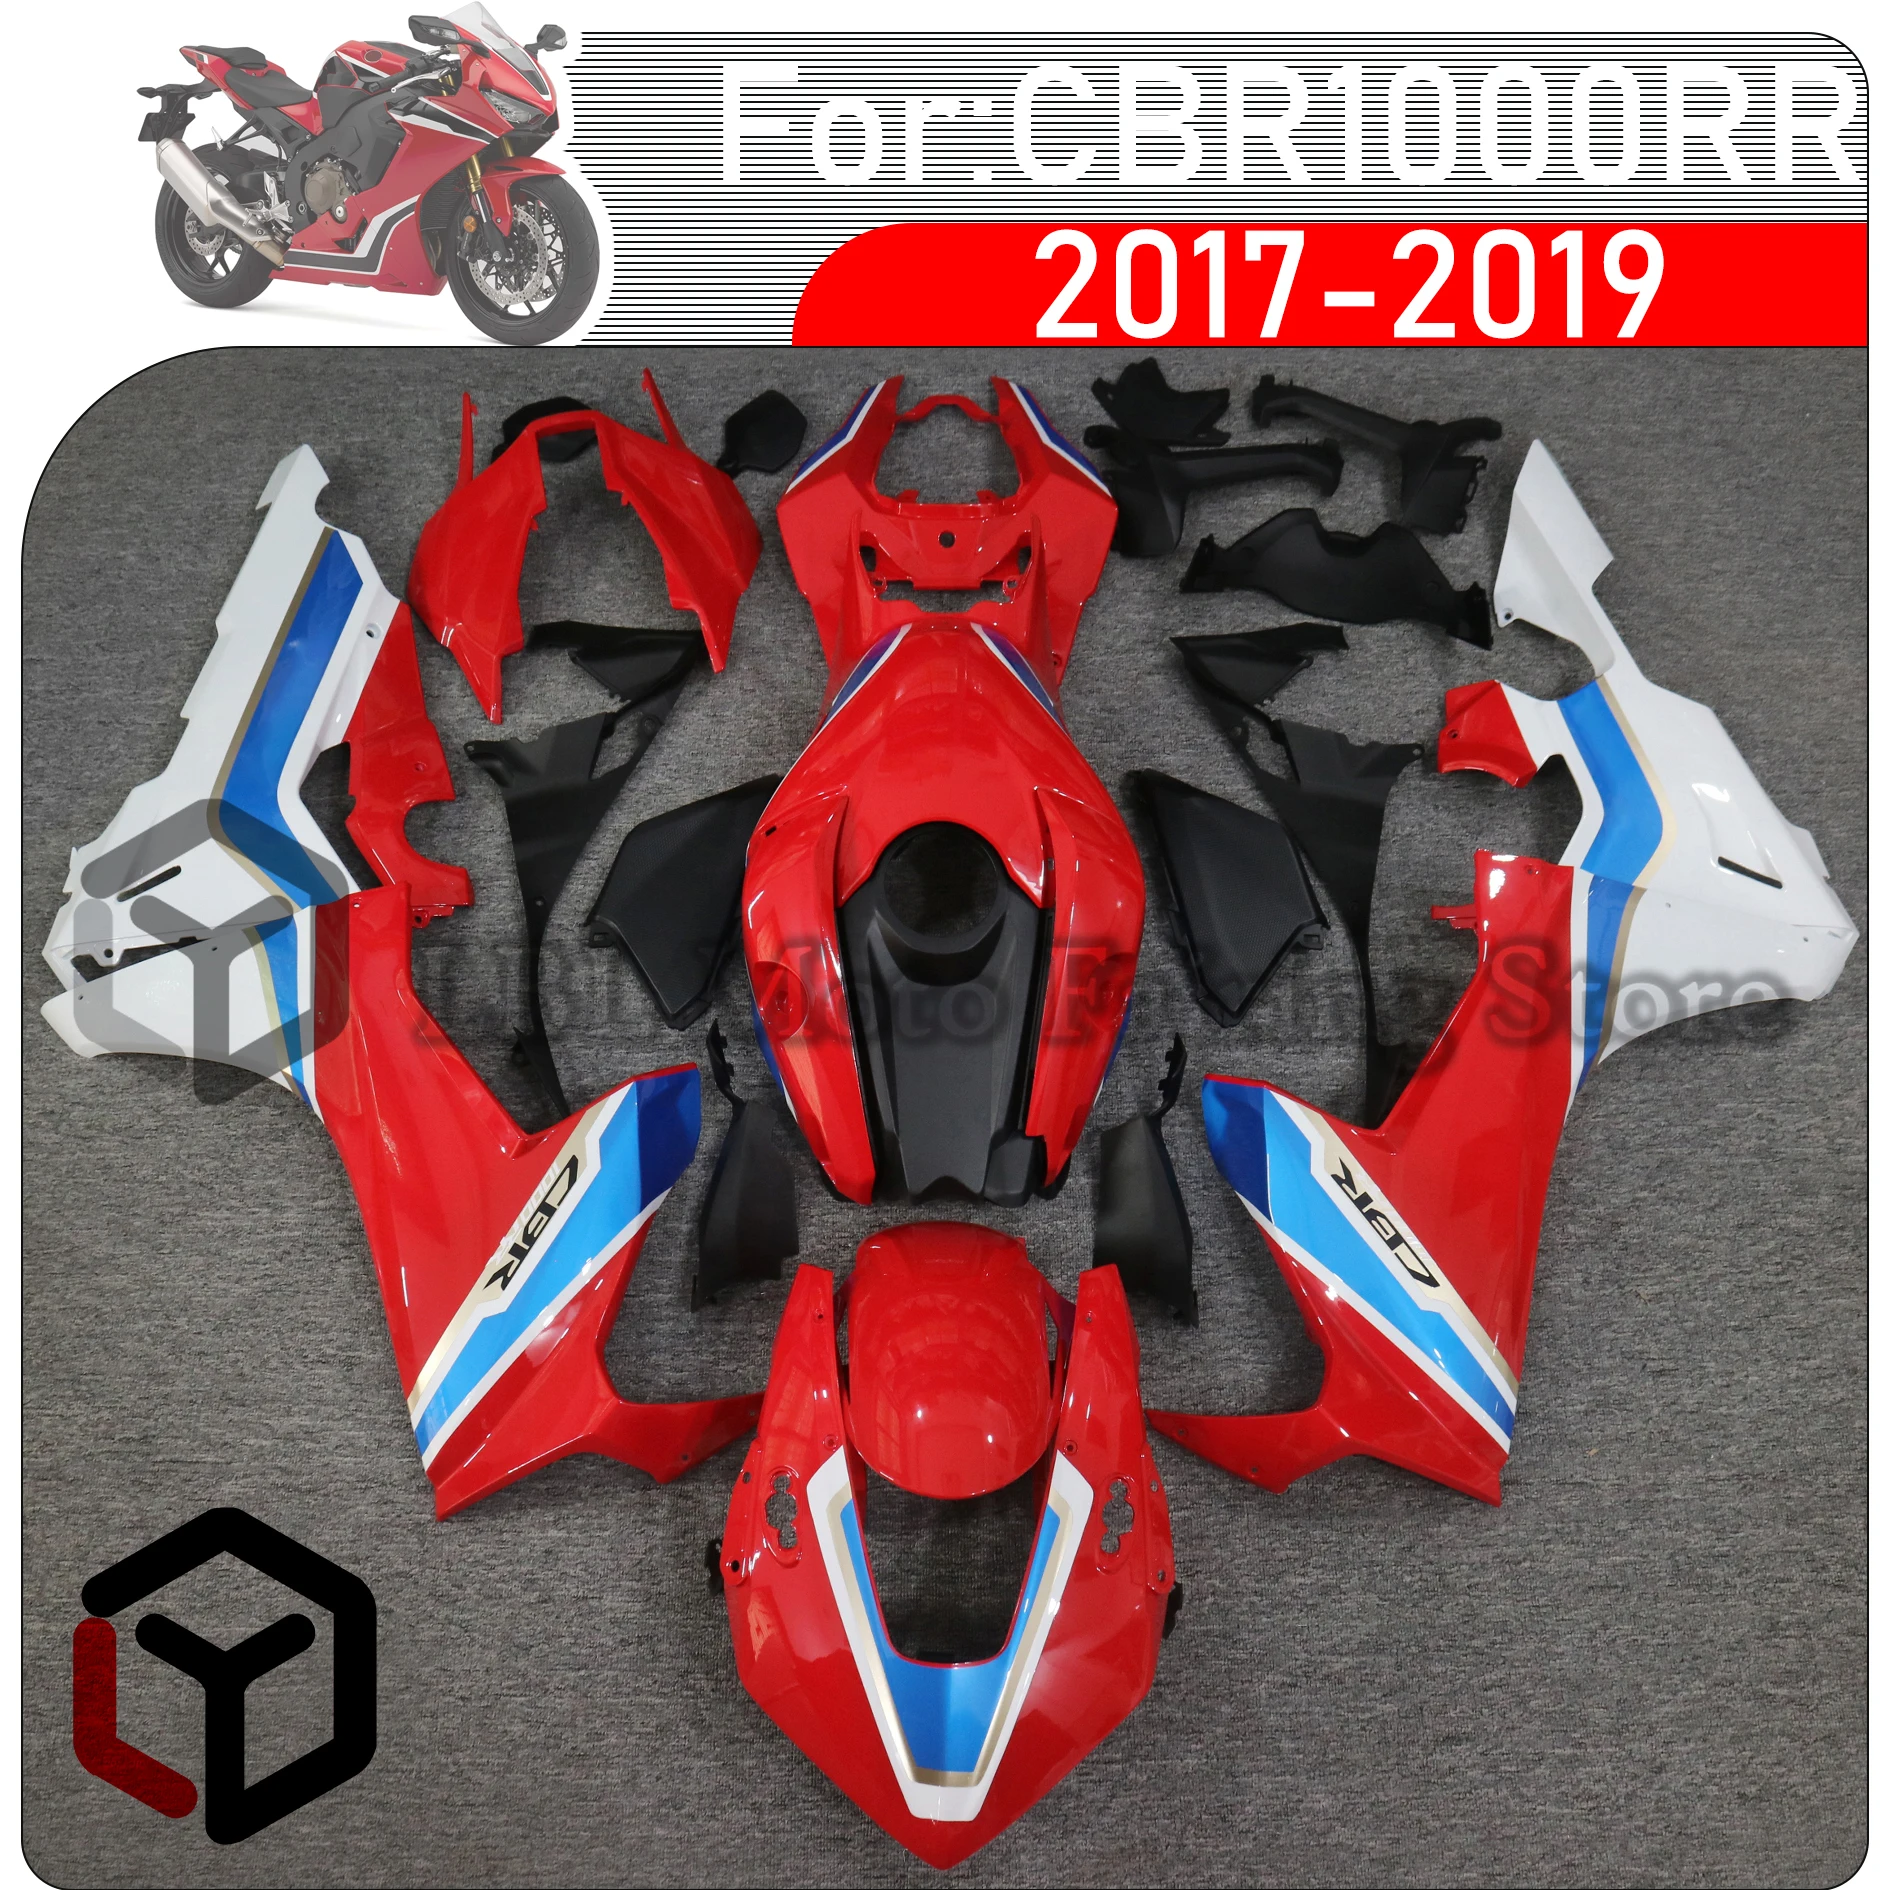 

For Honda CBR 1000RR CBR 1000 CBR1000RR 2017-2019 Motorcycle Full Body Fit Fairing For Honda CBR1000 RR 2017 - 2019 Full Fairing